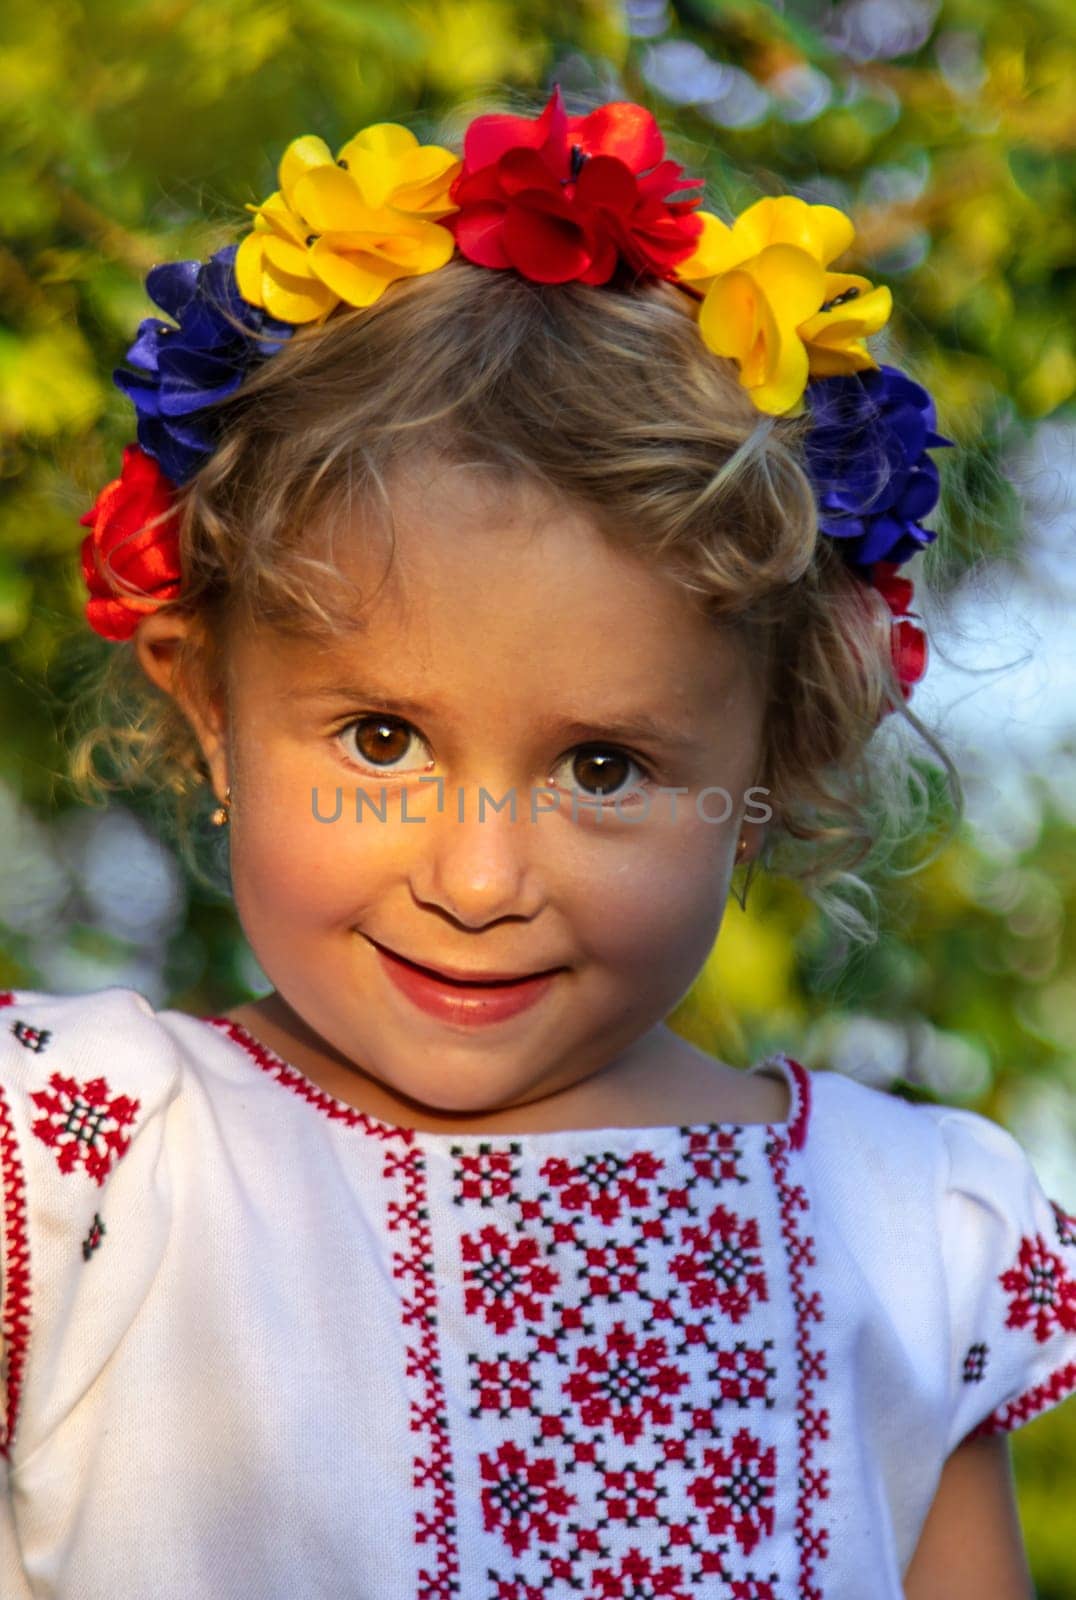 Child Ukrainian in a wreath. Selective focus. Nature.